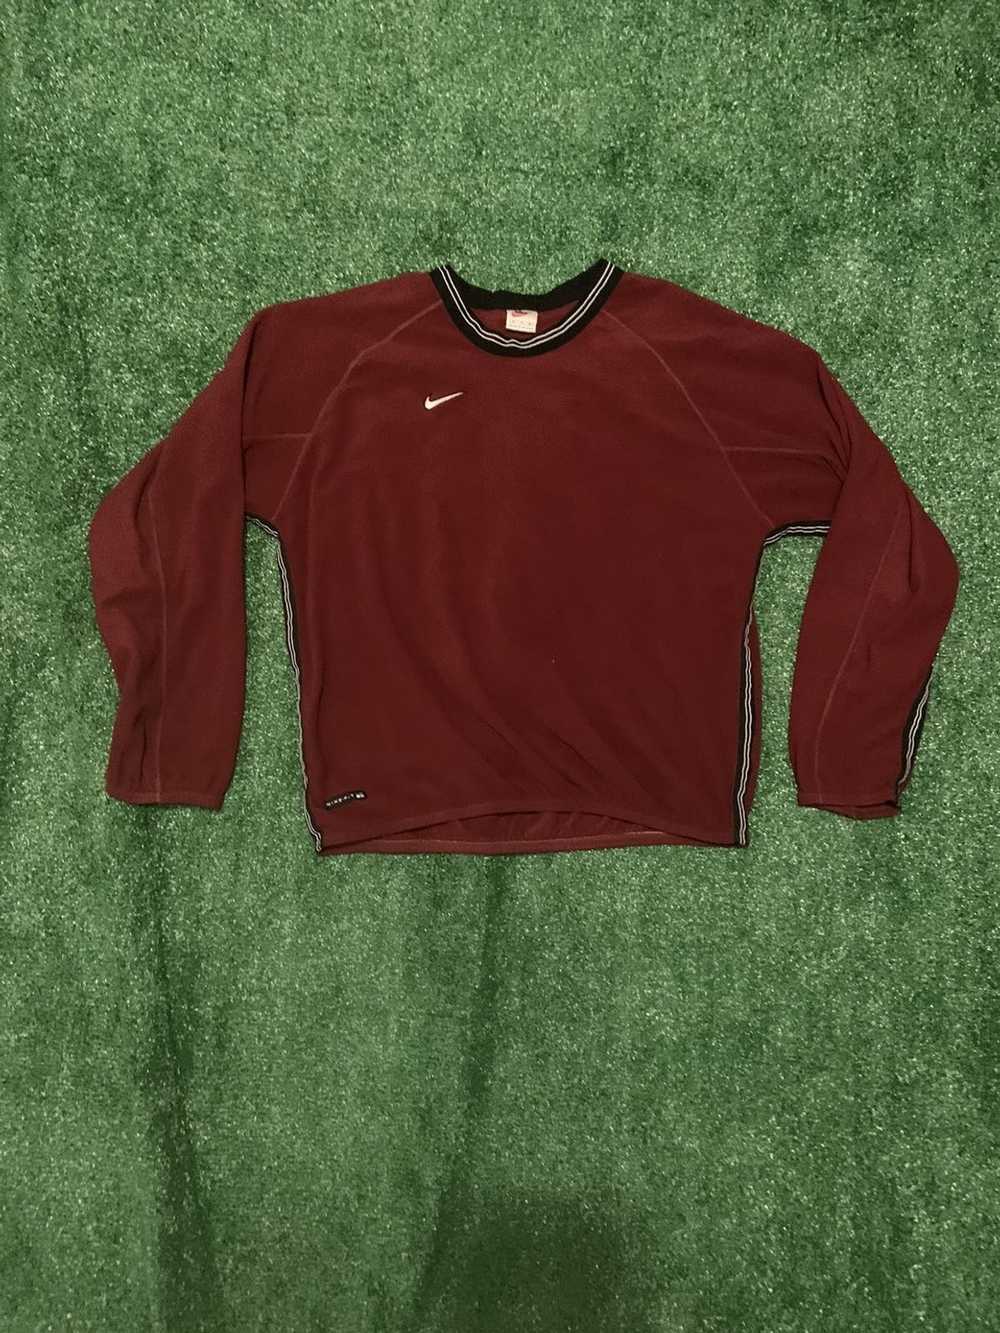 Nike Vtg Nike fleece crewneck sweater - image 1